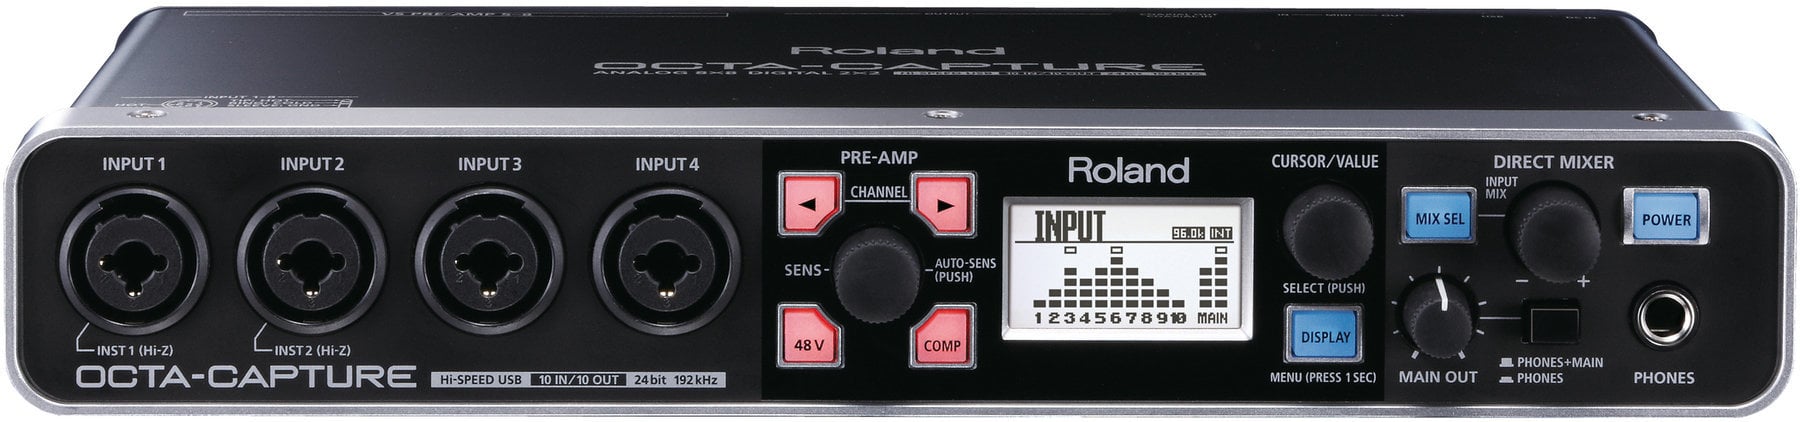 USB Audiointerface Roland UA-1010 Octa Capture